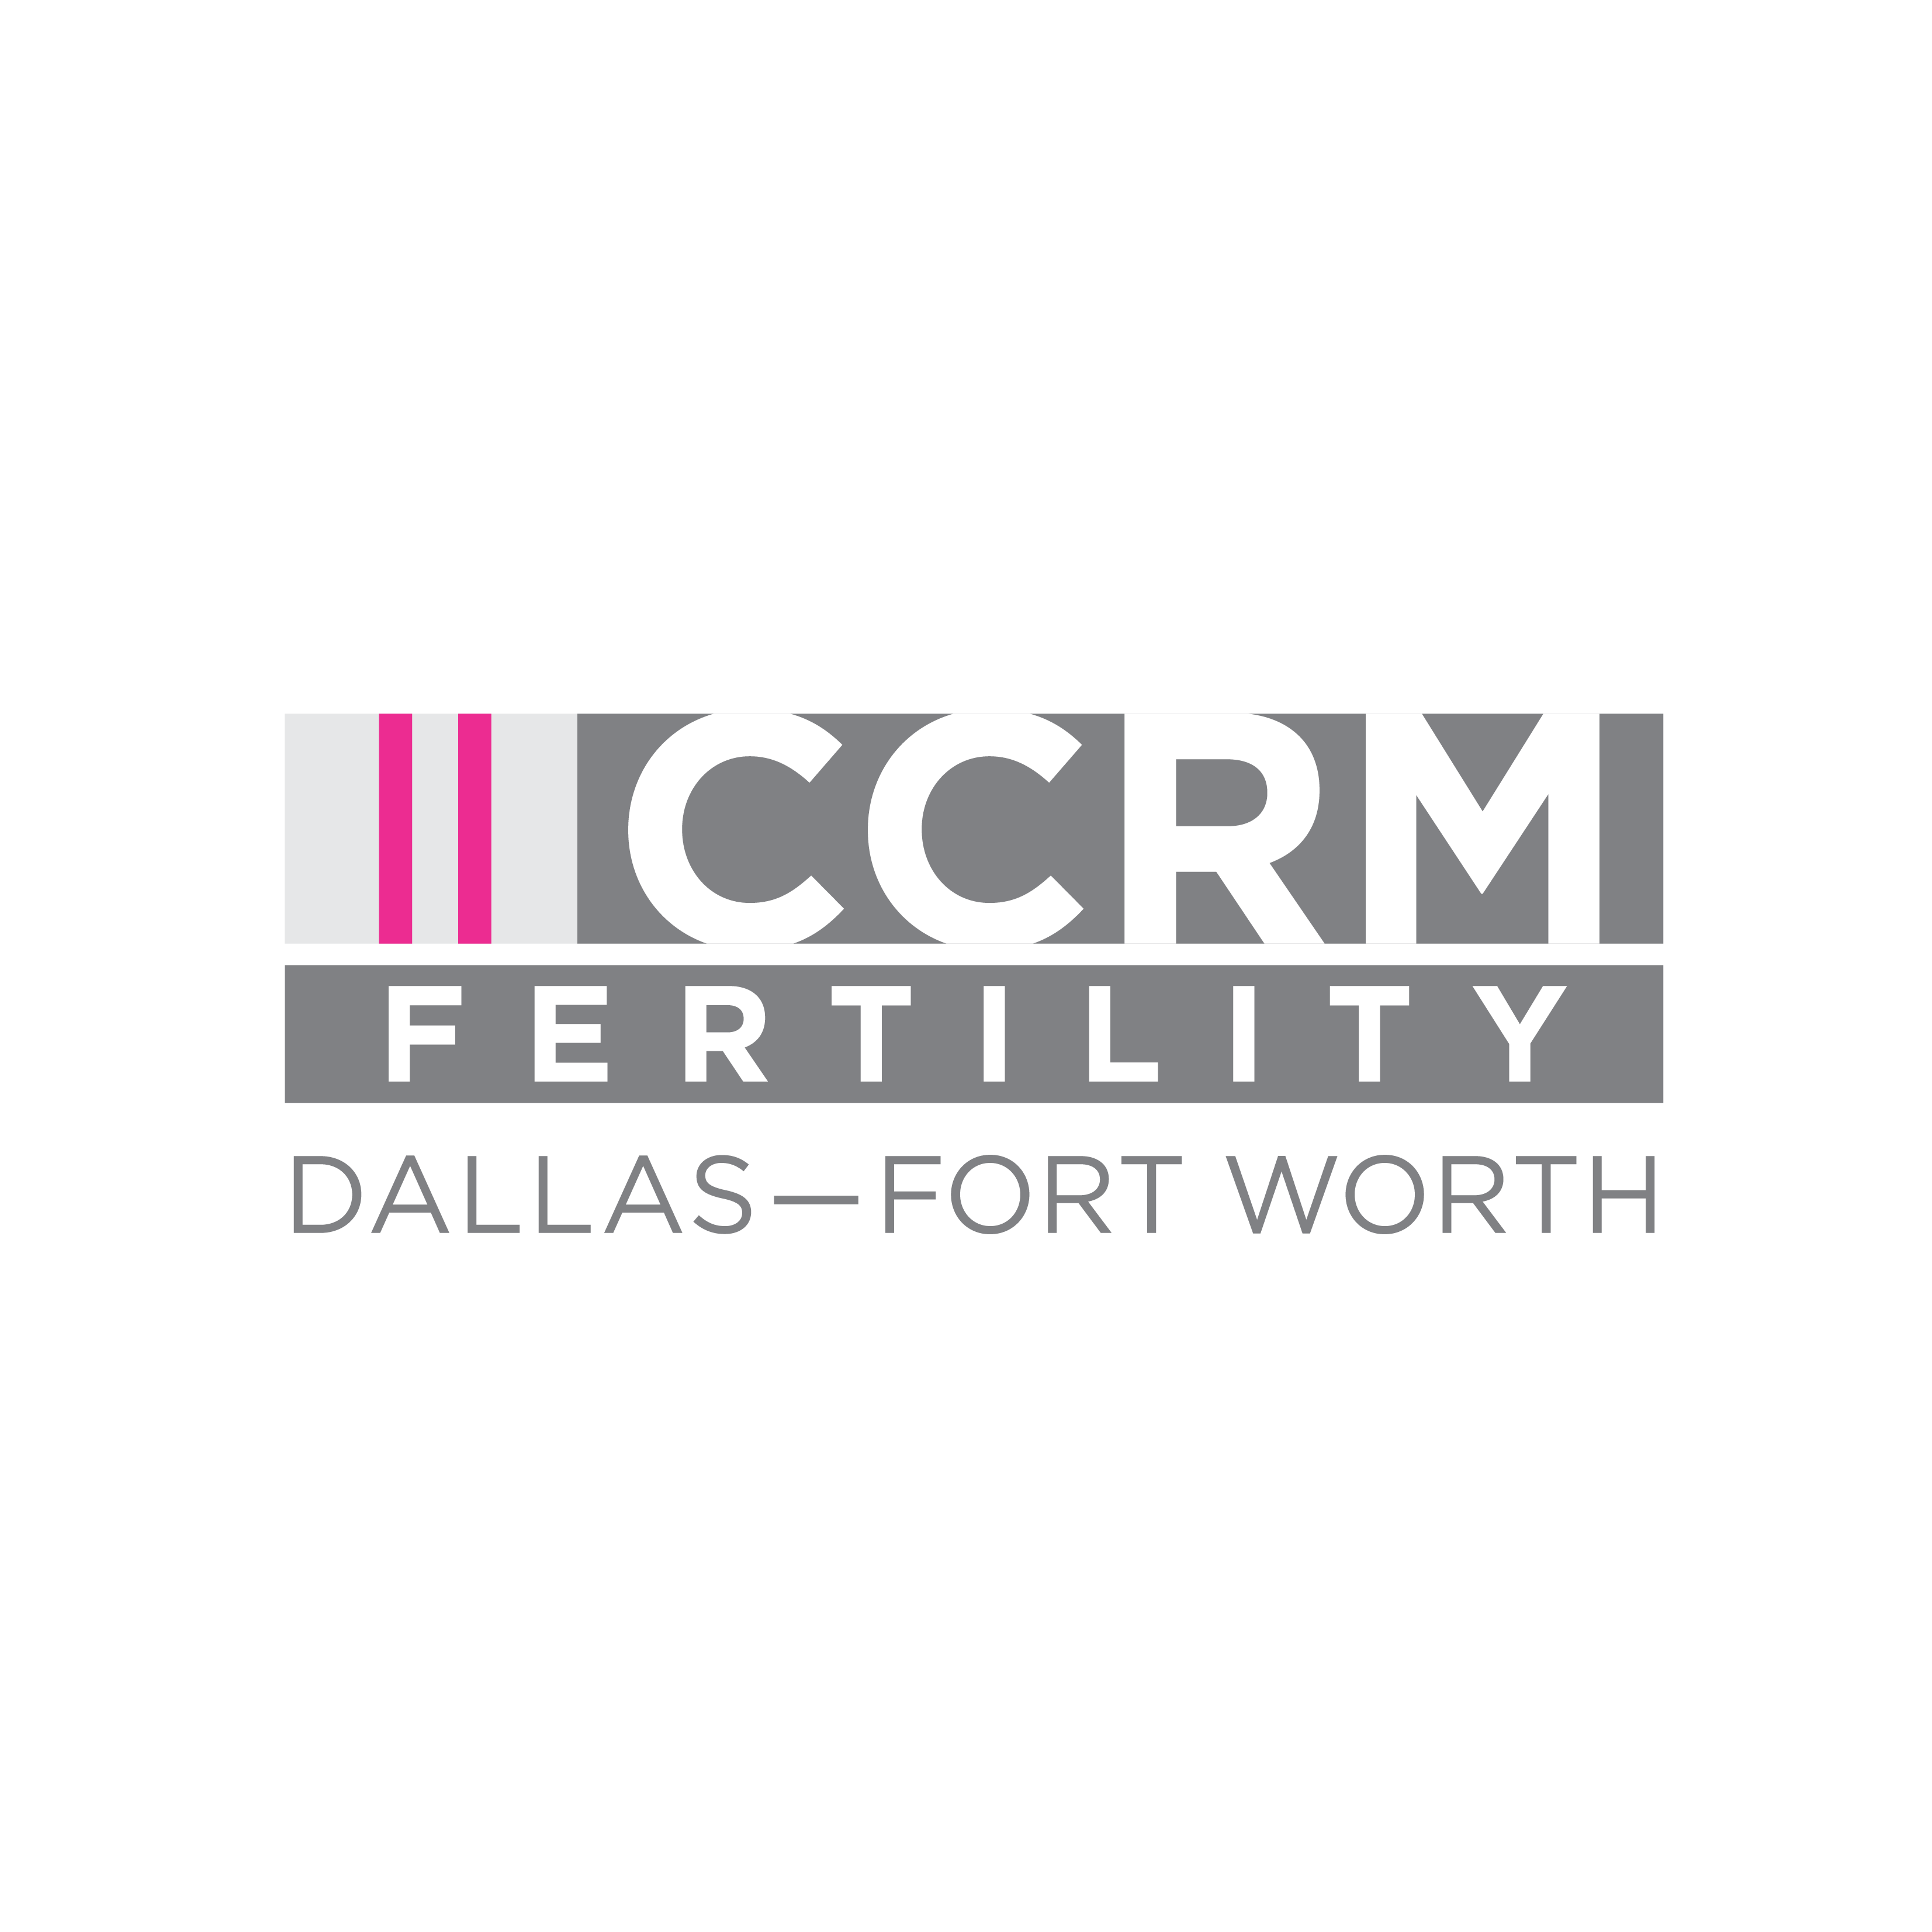 CCRM Fertility Dallas-Fort Worth Photo